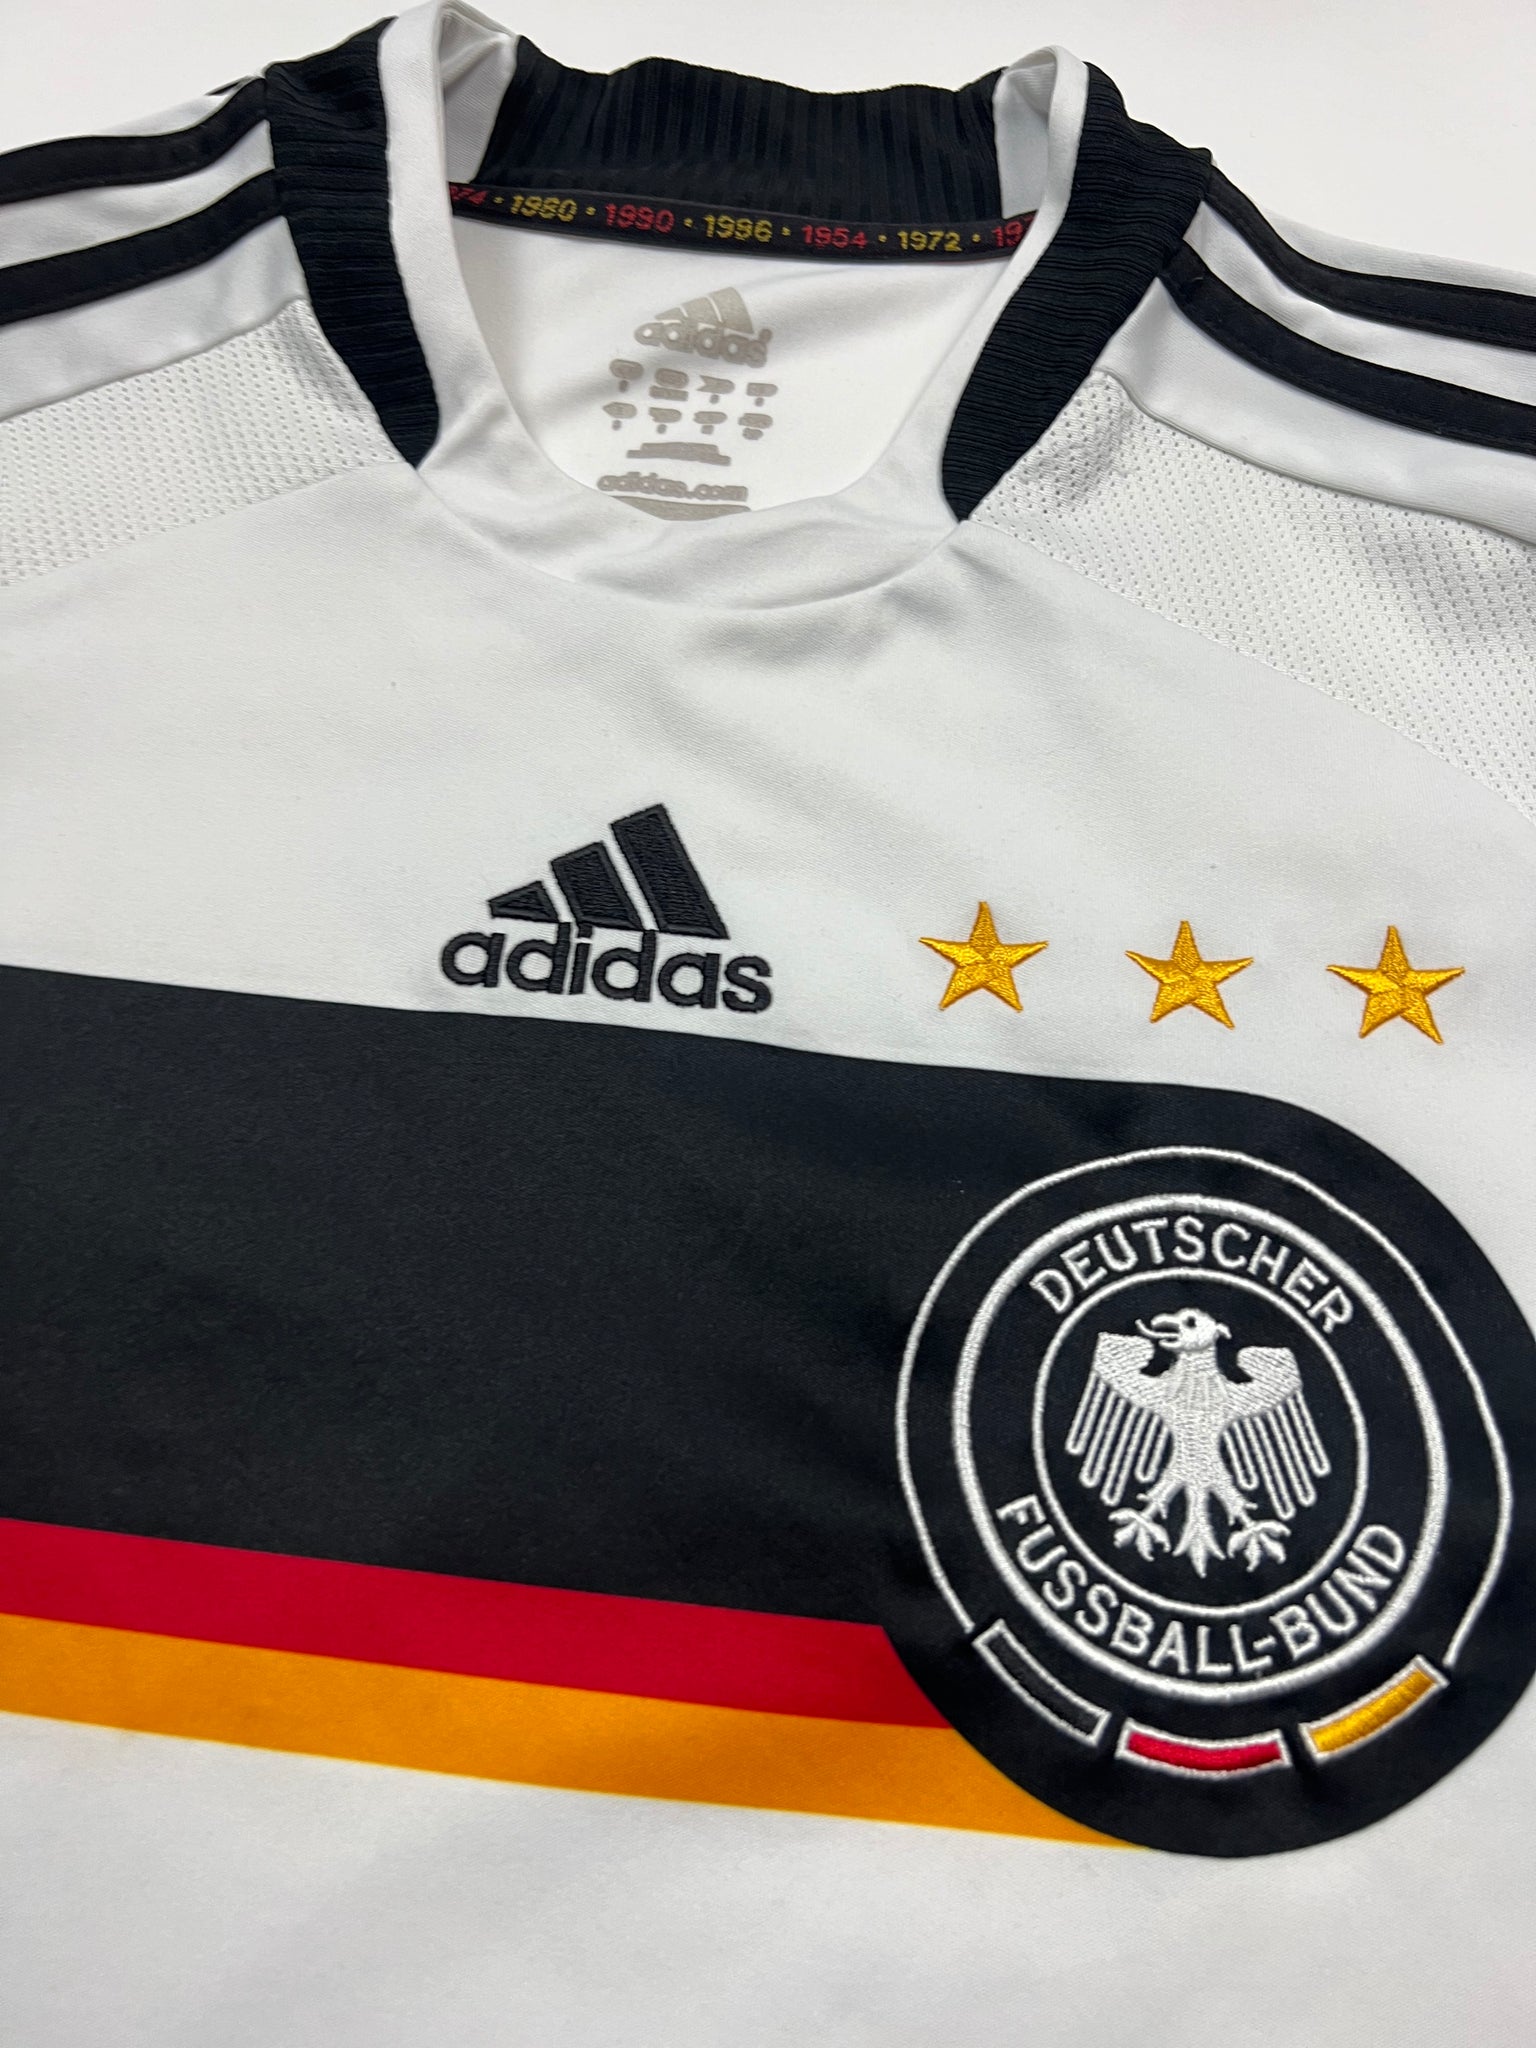 Adidas Germany Jersey (S)